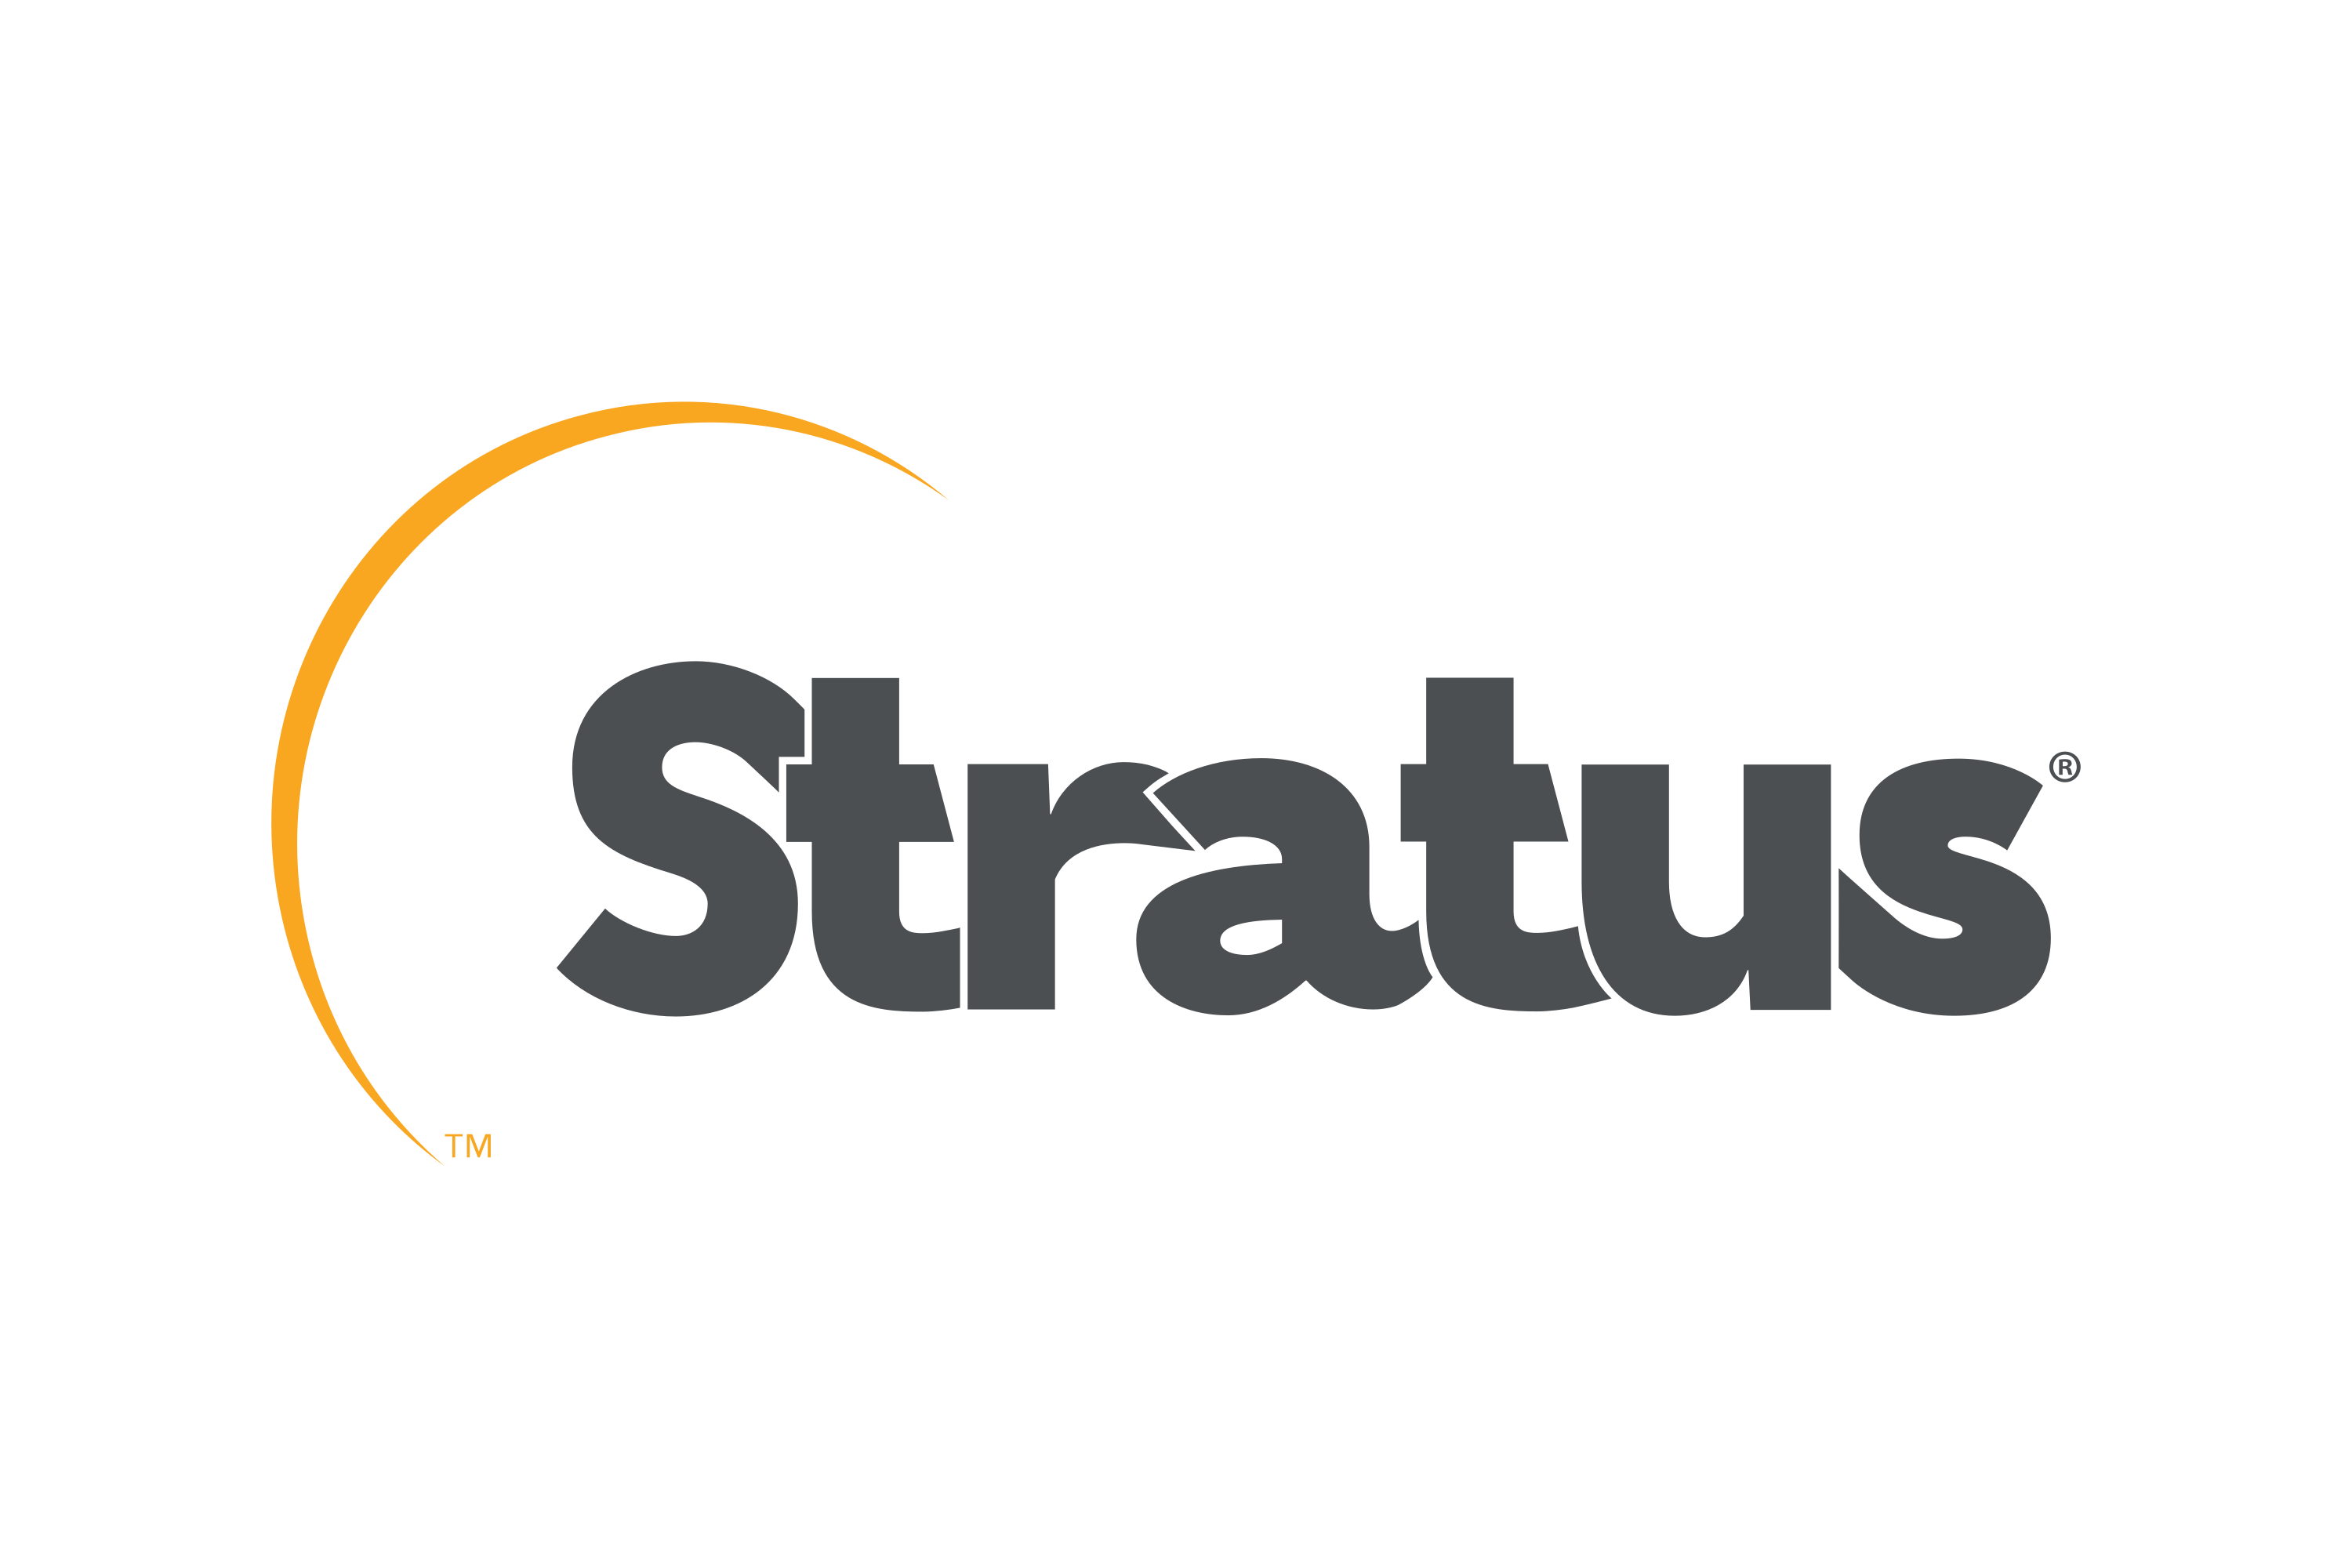 Stratus Technologies Logo